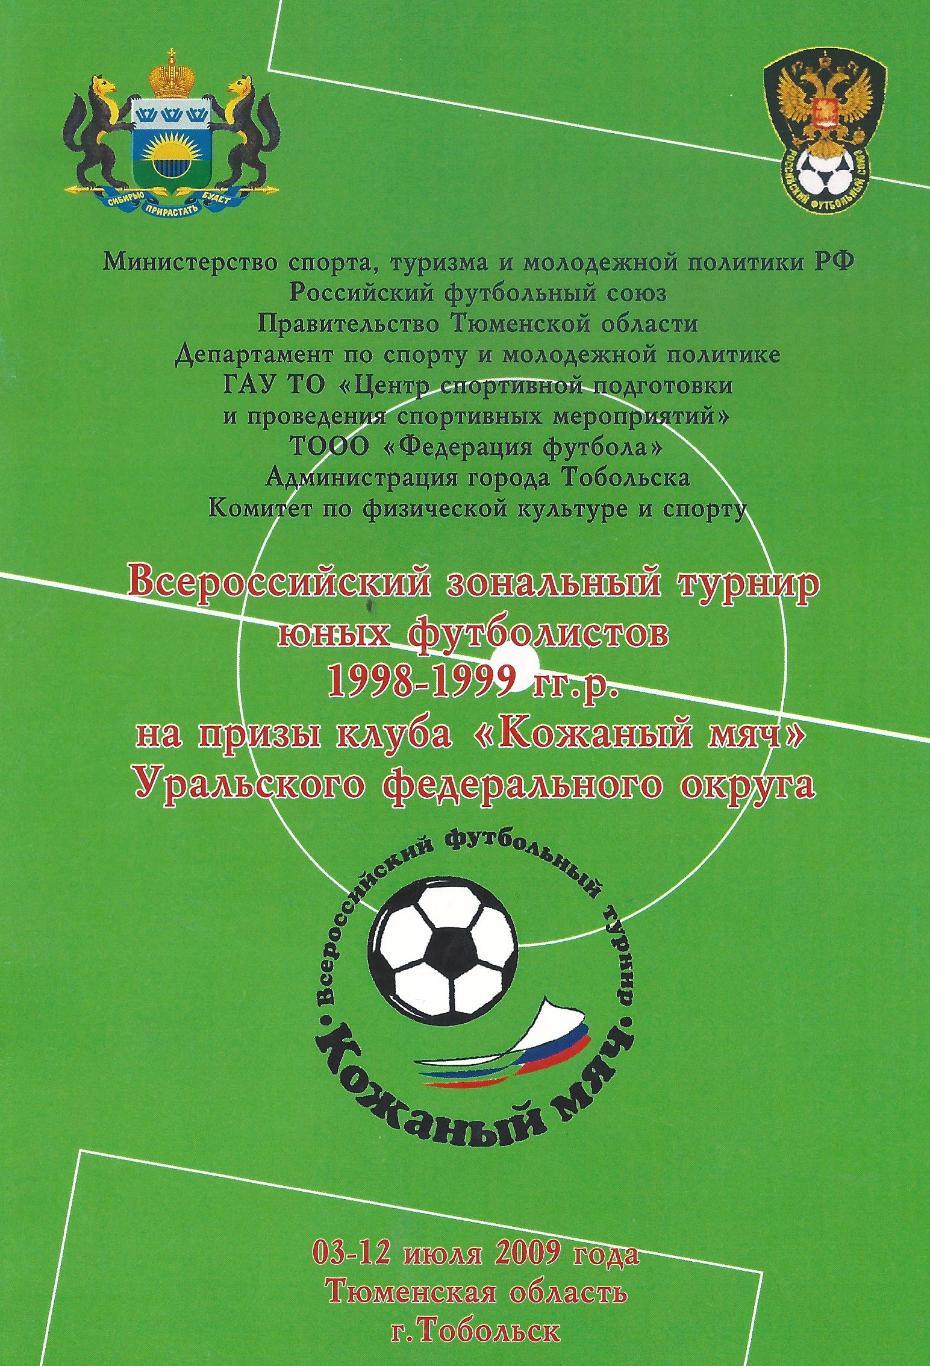 2009 - Турнир Кожаный Мяч 1998-1999 г.р.